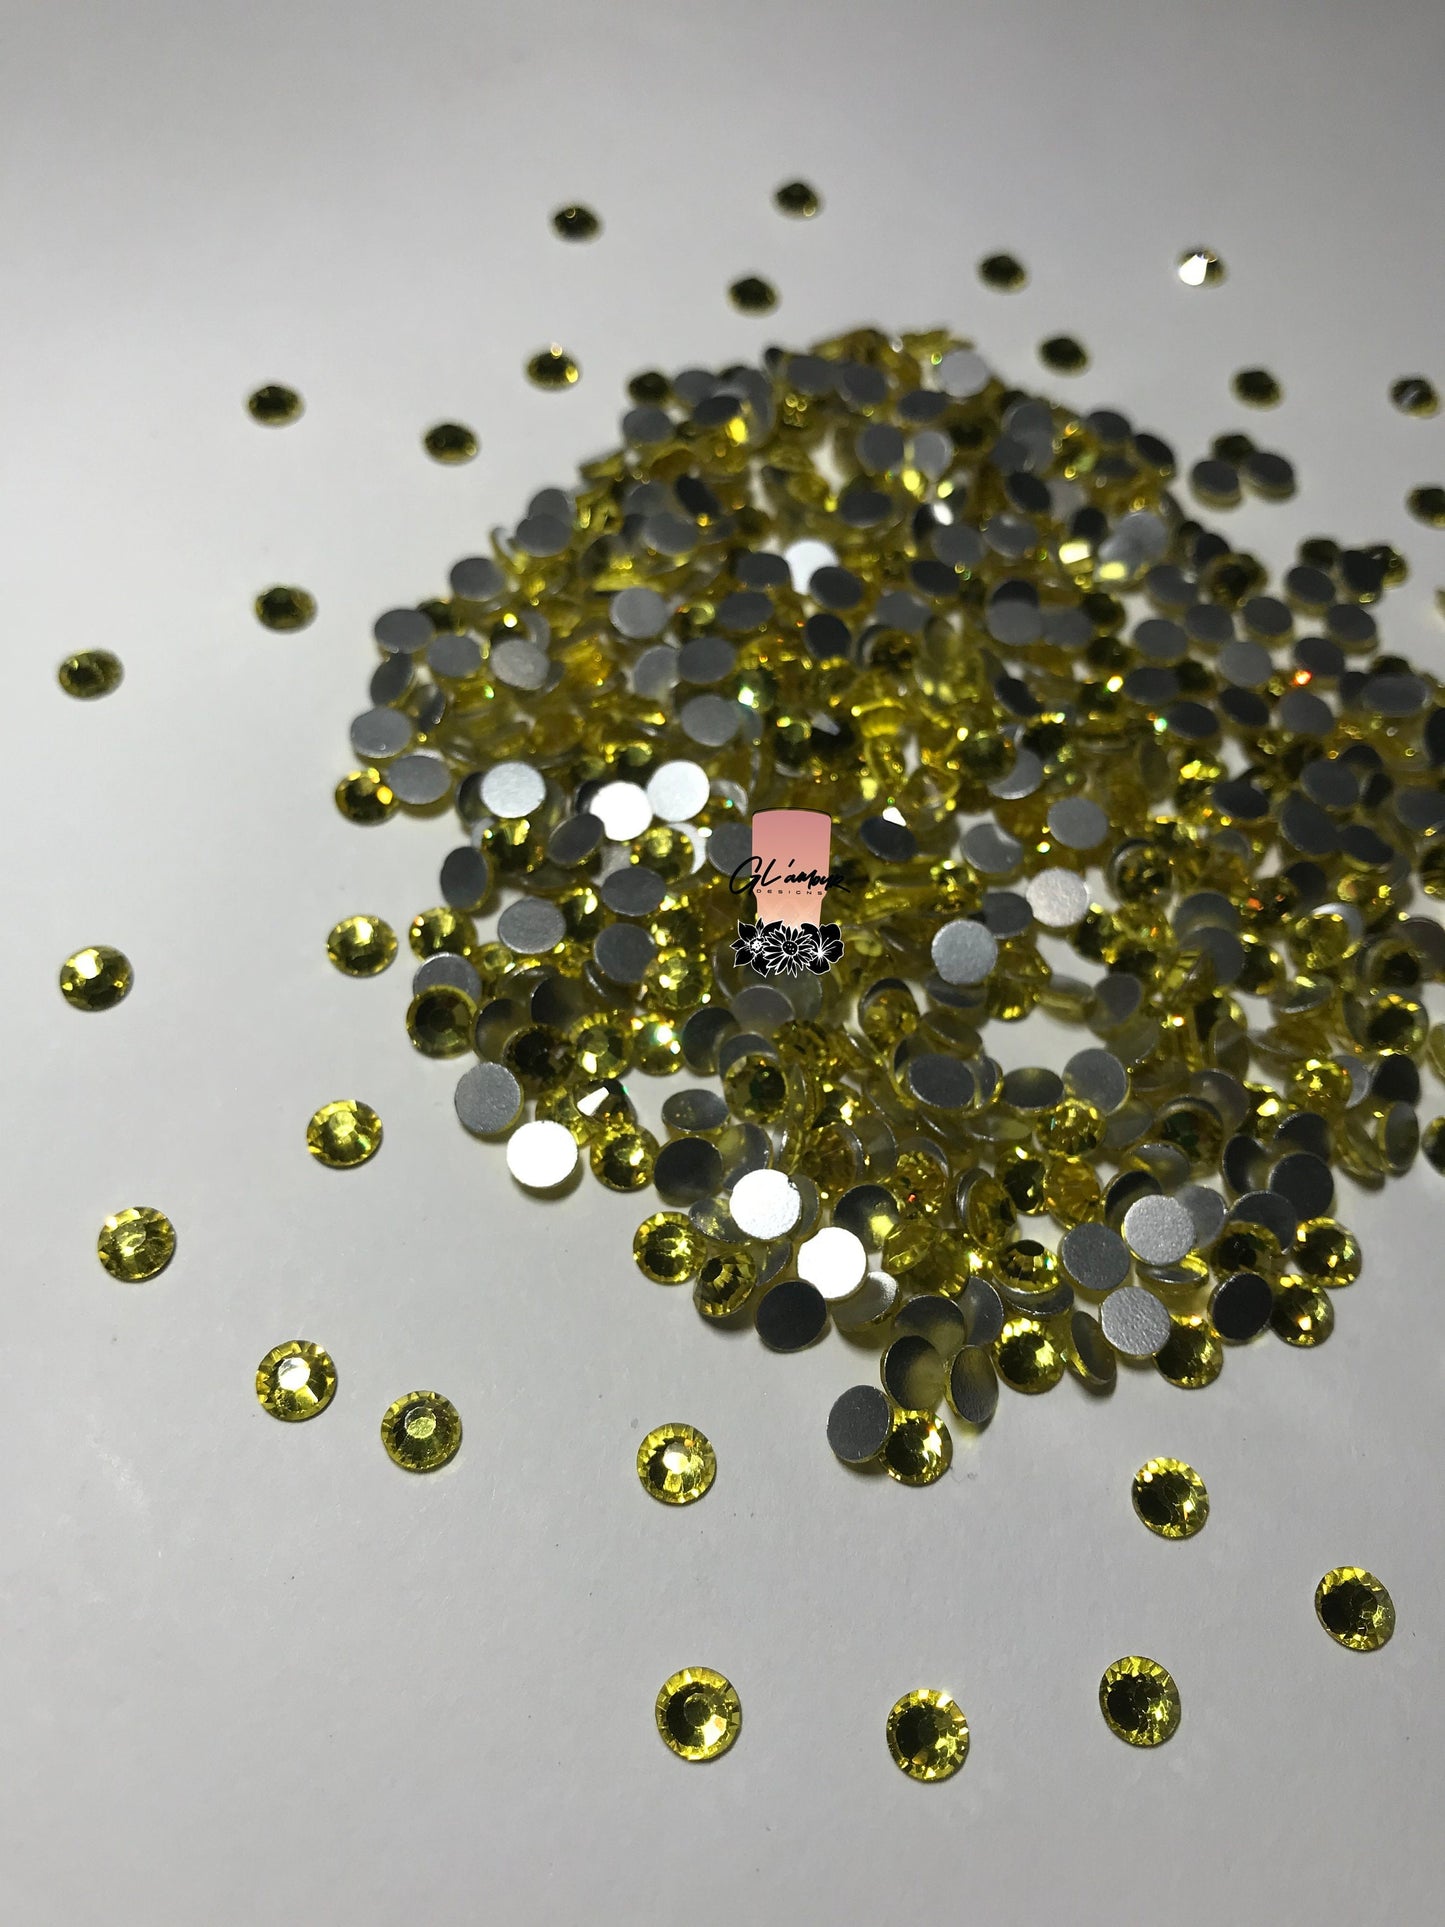 Yellow Crystal Glass Flat Back Rhinestones - 1440pcs per bag